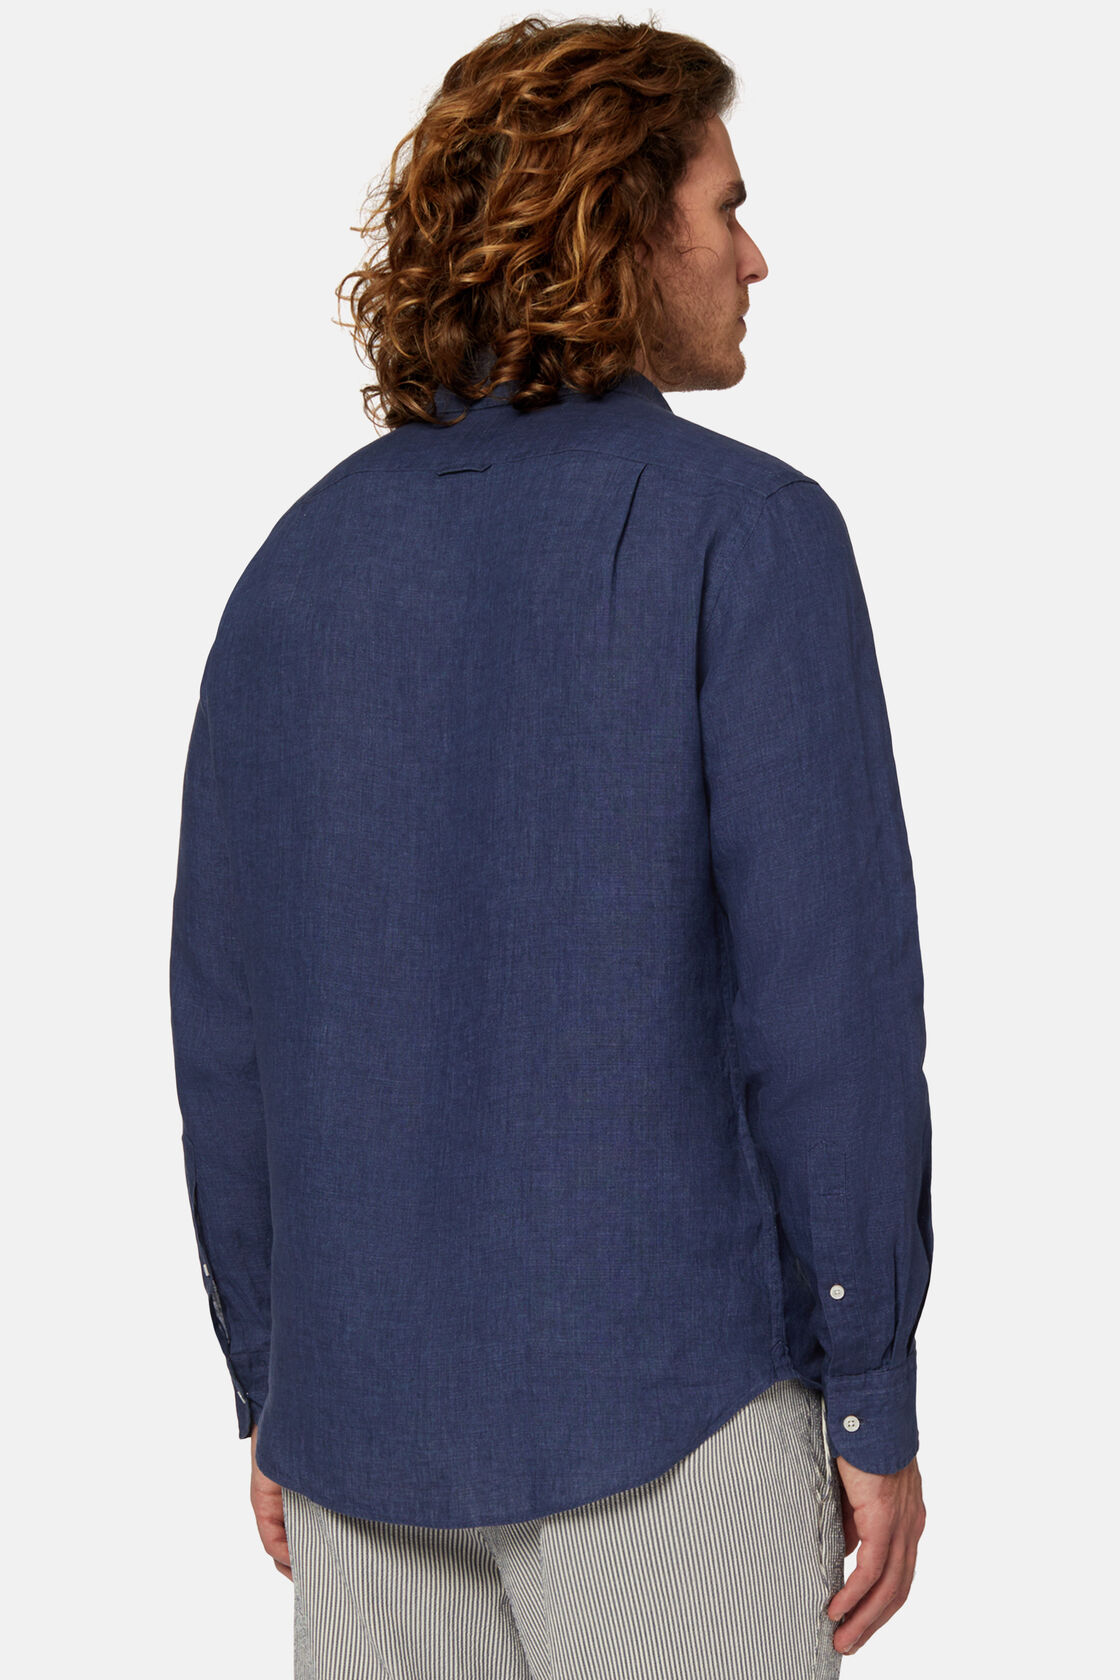 Regular Fit Navy Blue Linen Shirt, Navy blue, hi-res